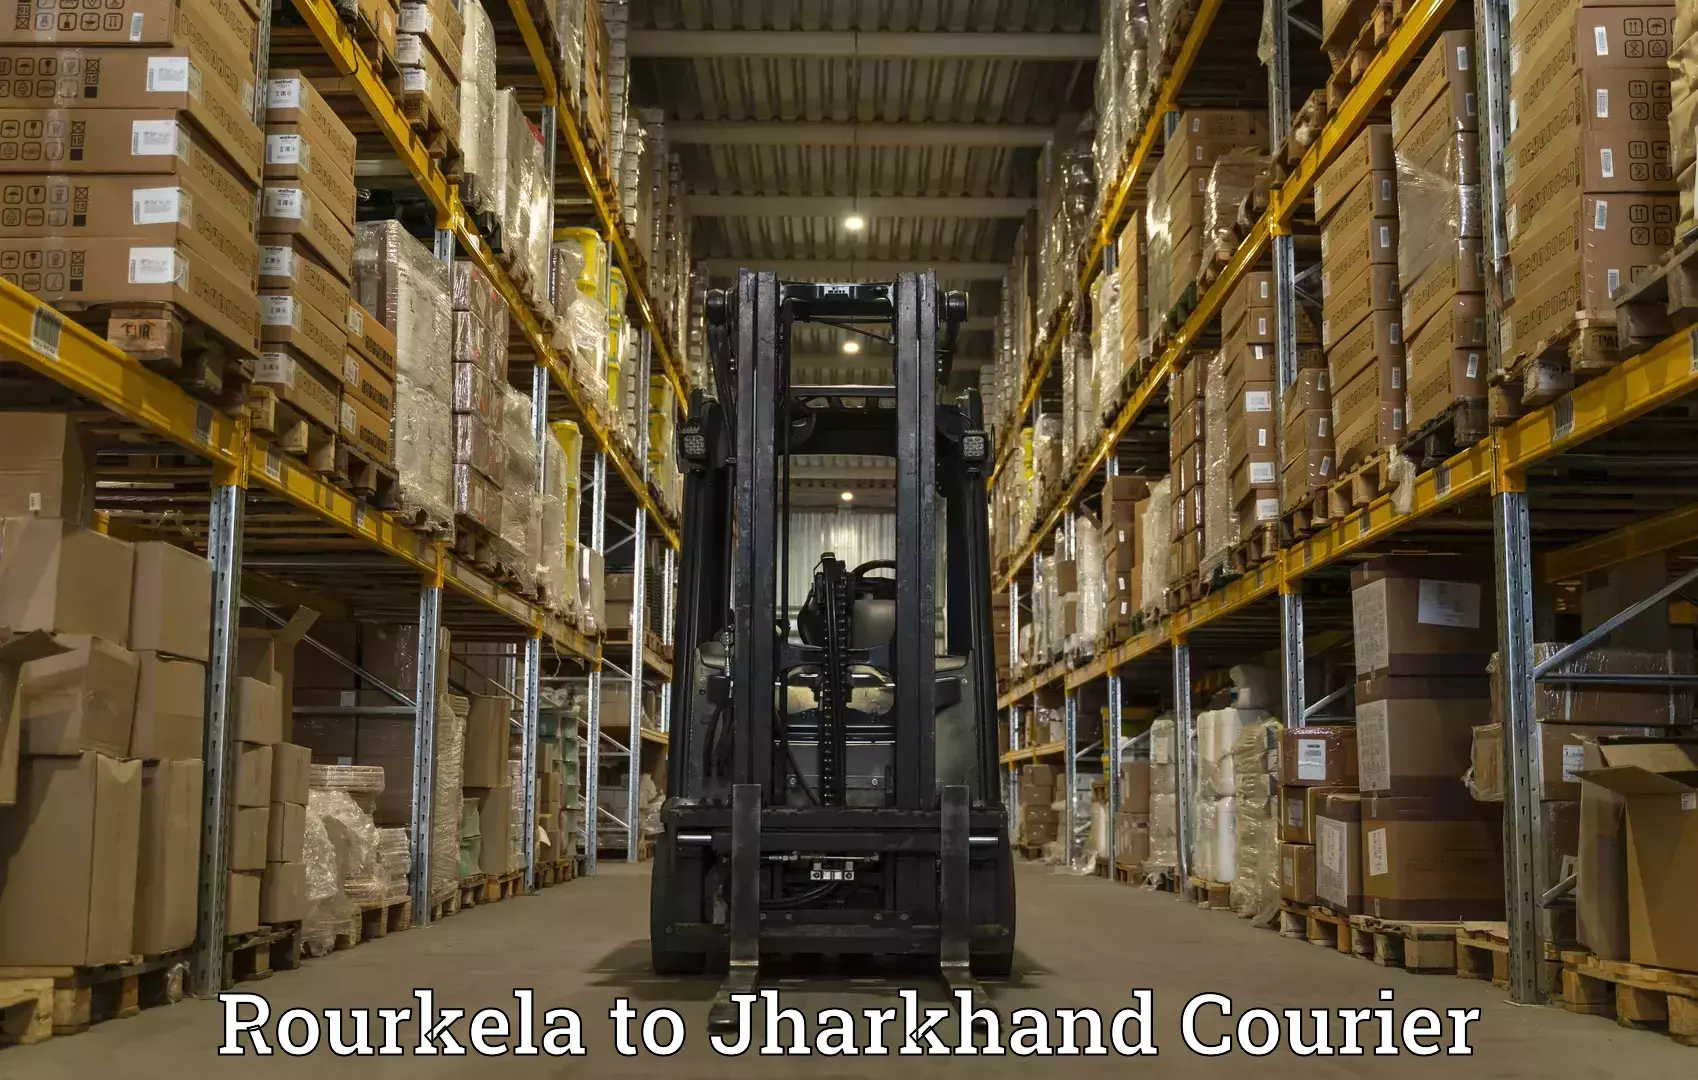 Advanced shipping network Rourkela to Medininagar